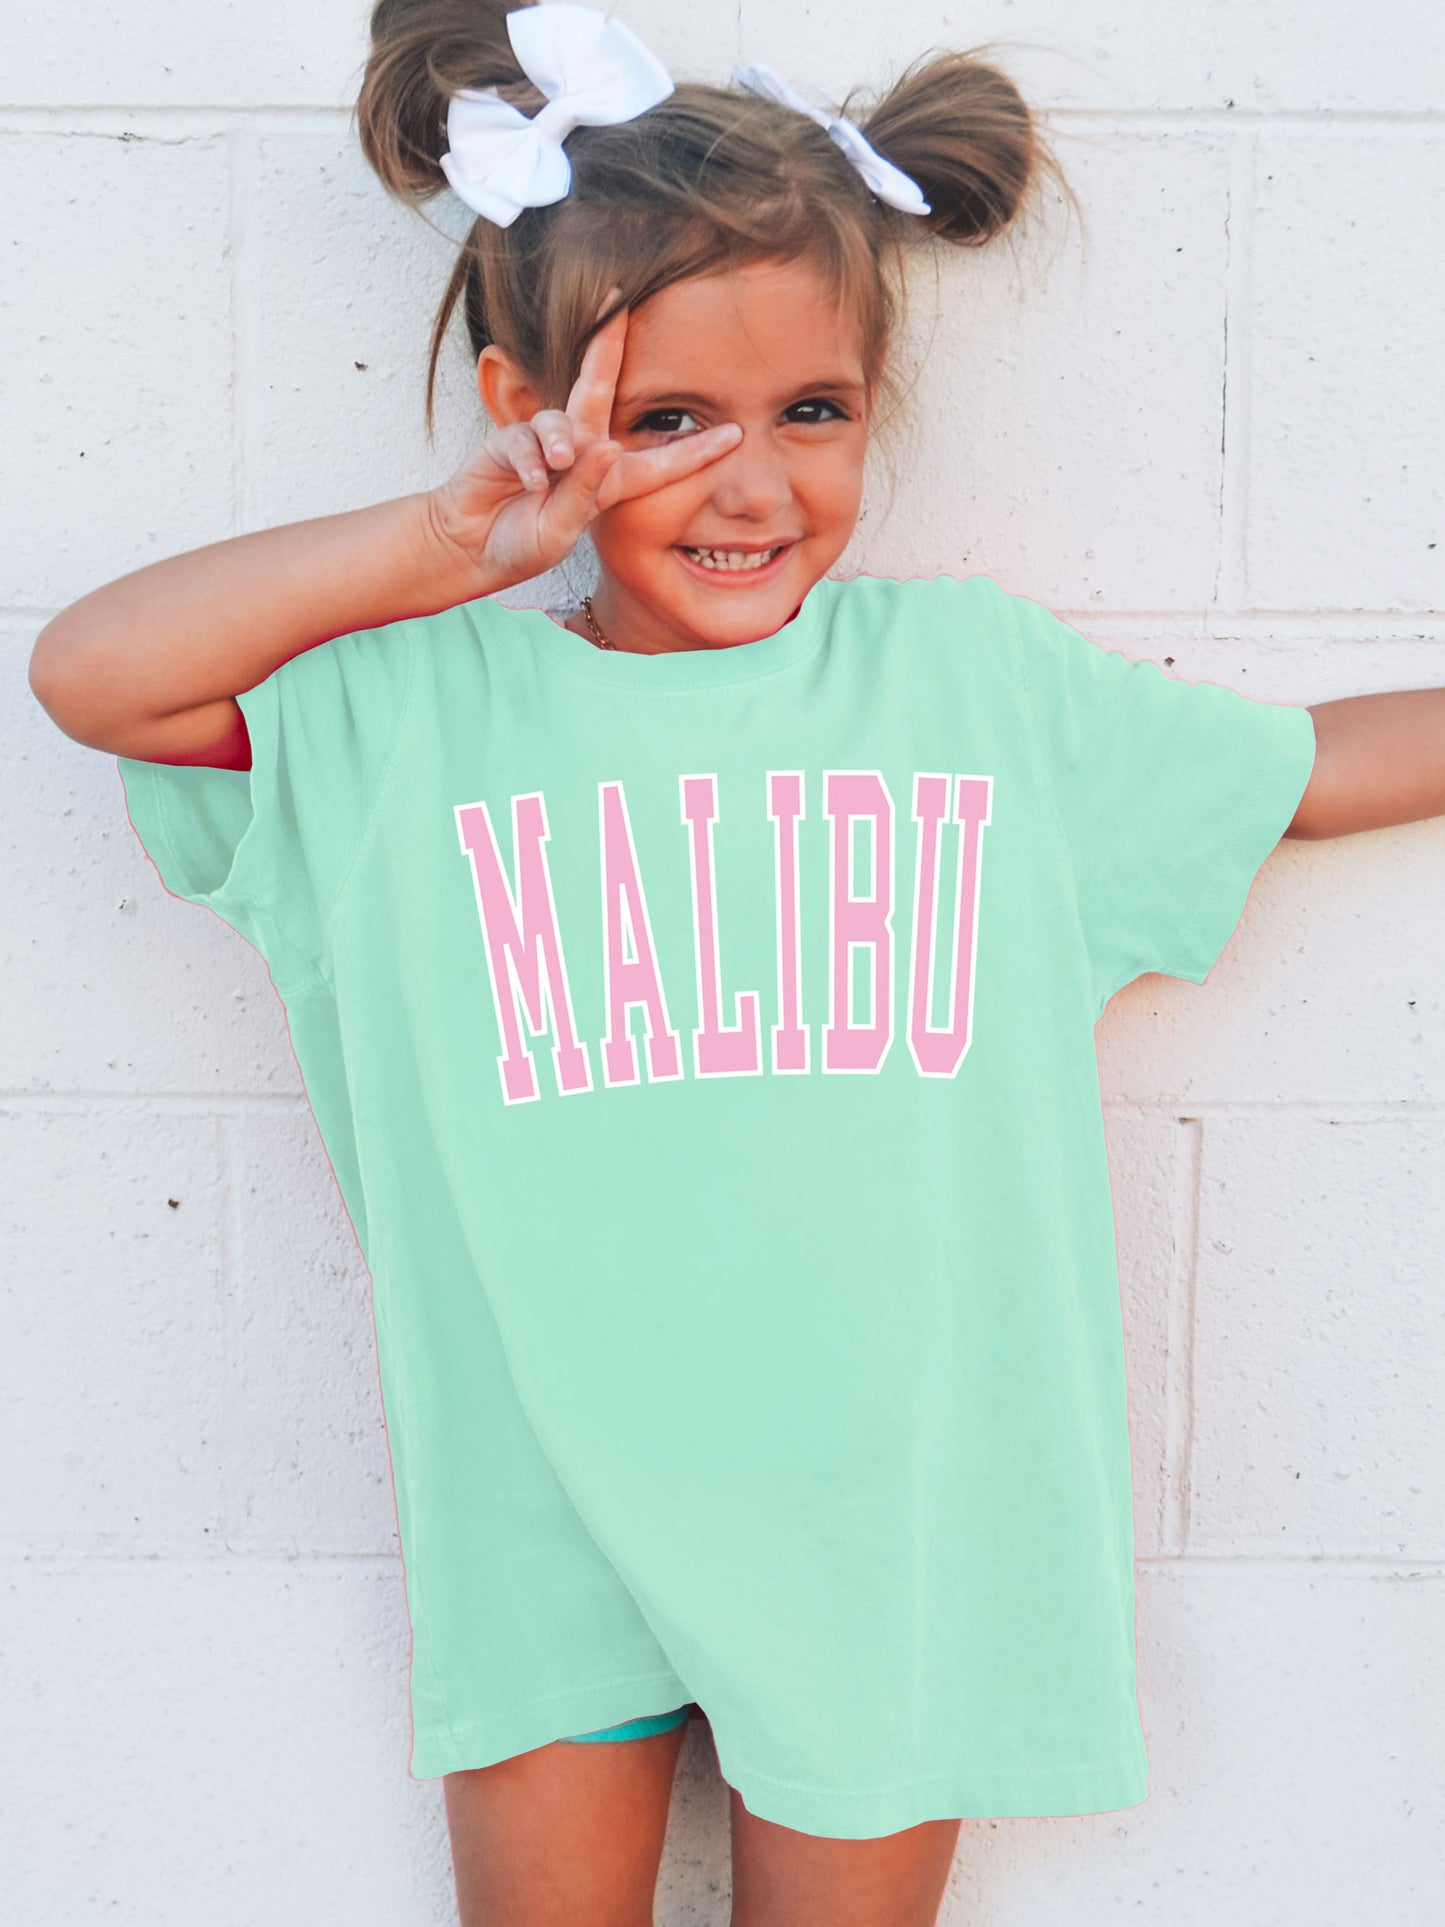 Kids Malibu Comfort Colors® Tshirt - Pink Ink